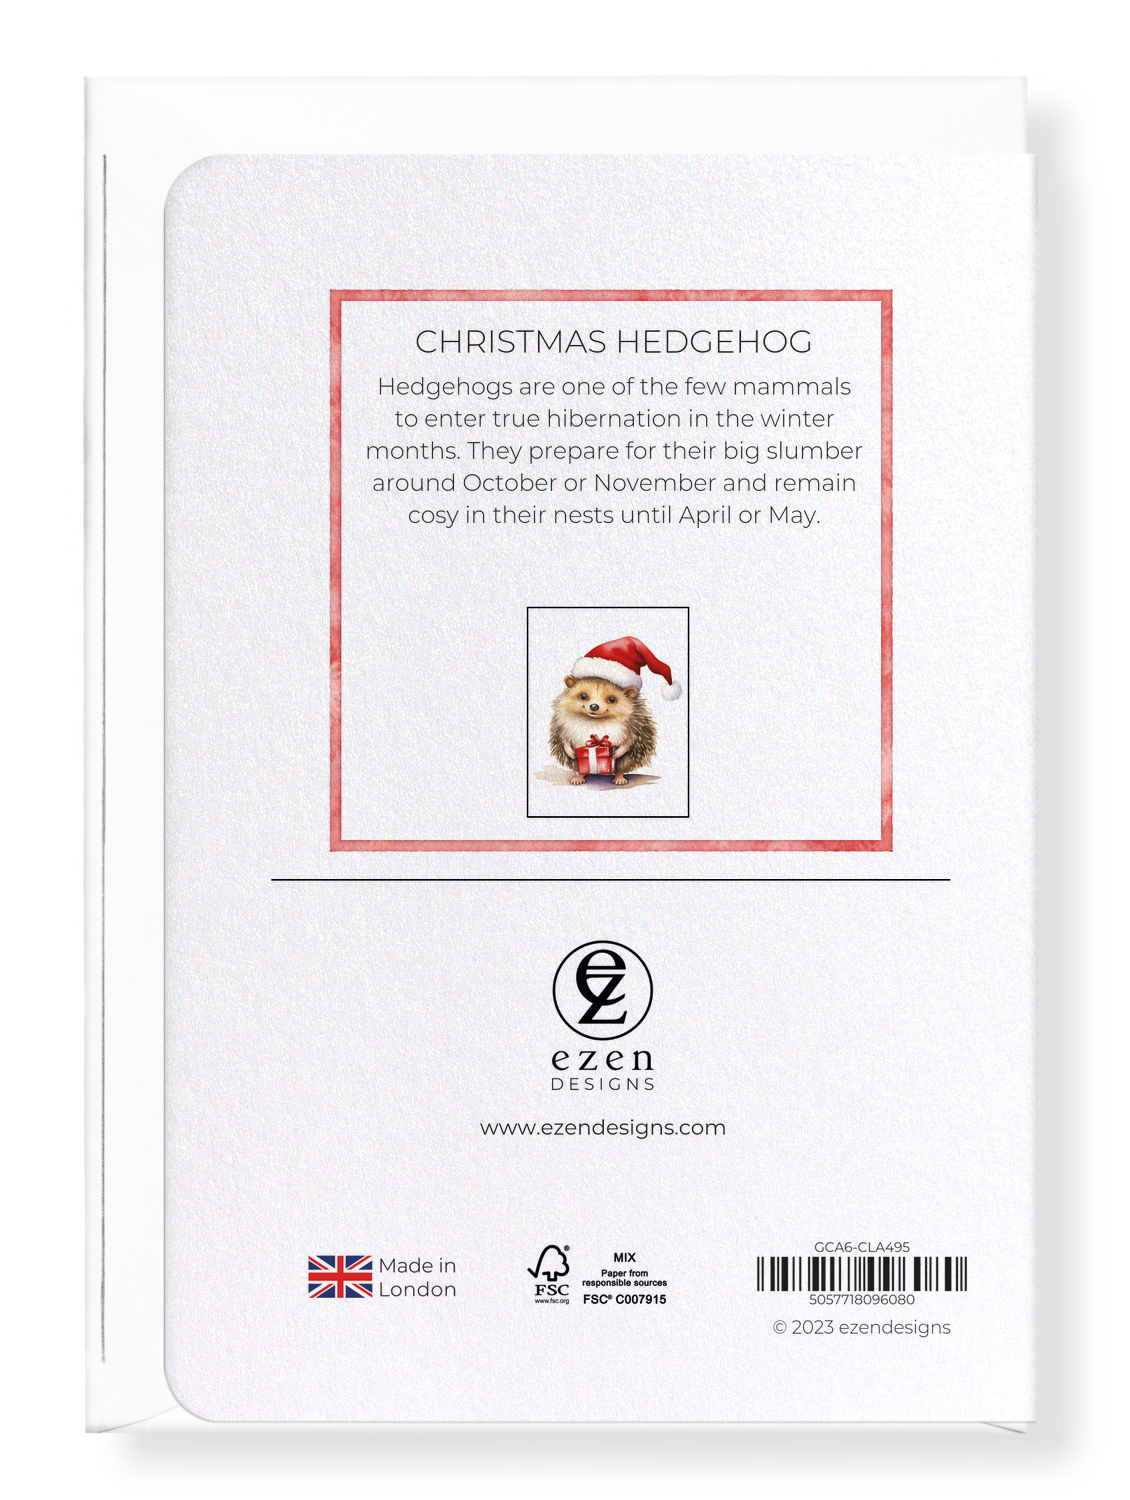 Ezen Designs - Christmas Hedgehog - Greeting Card - Back